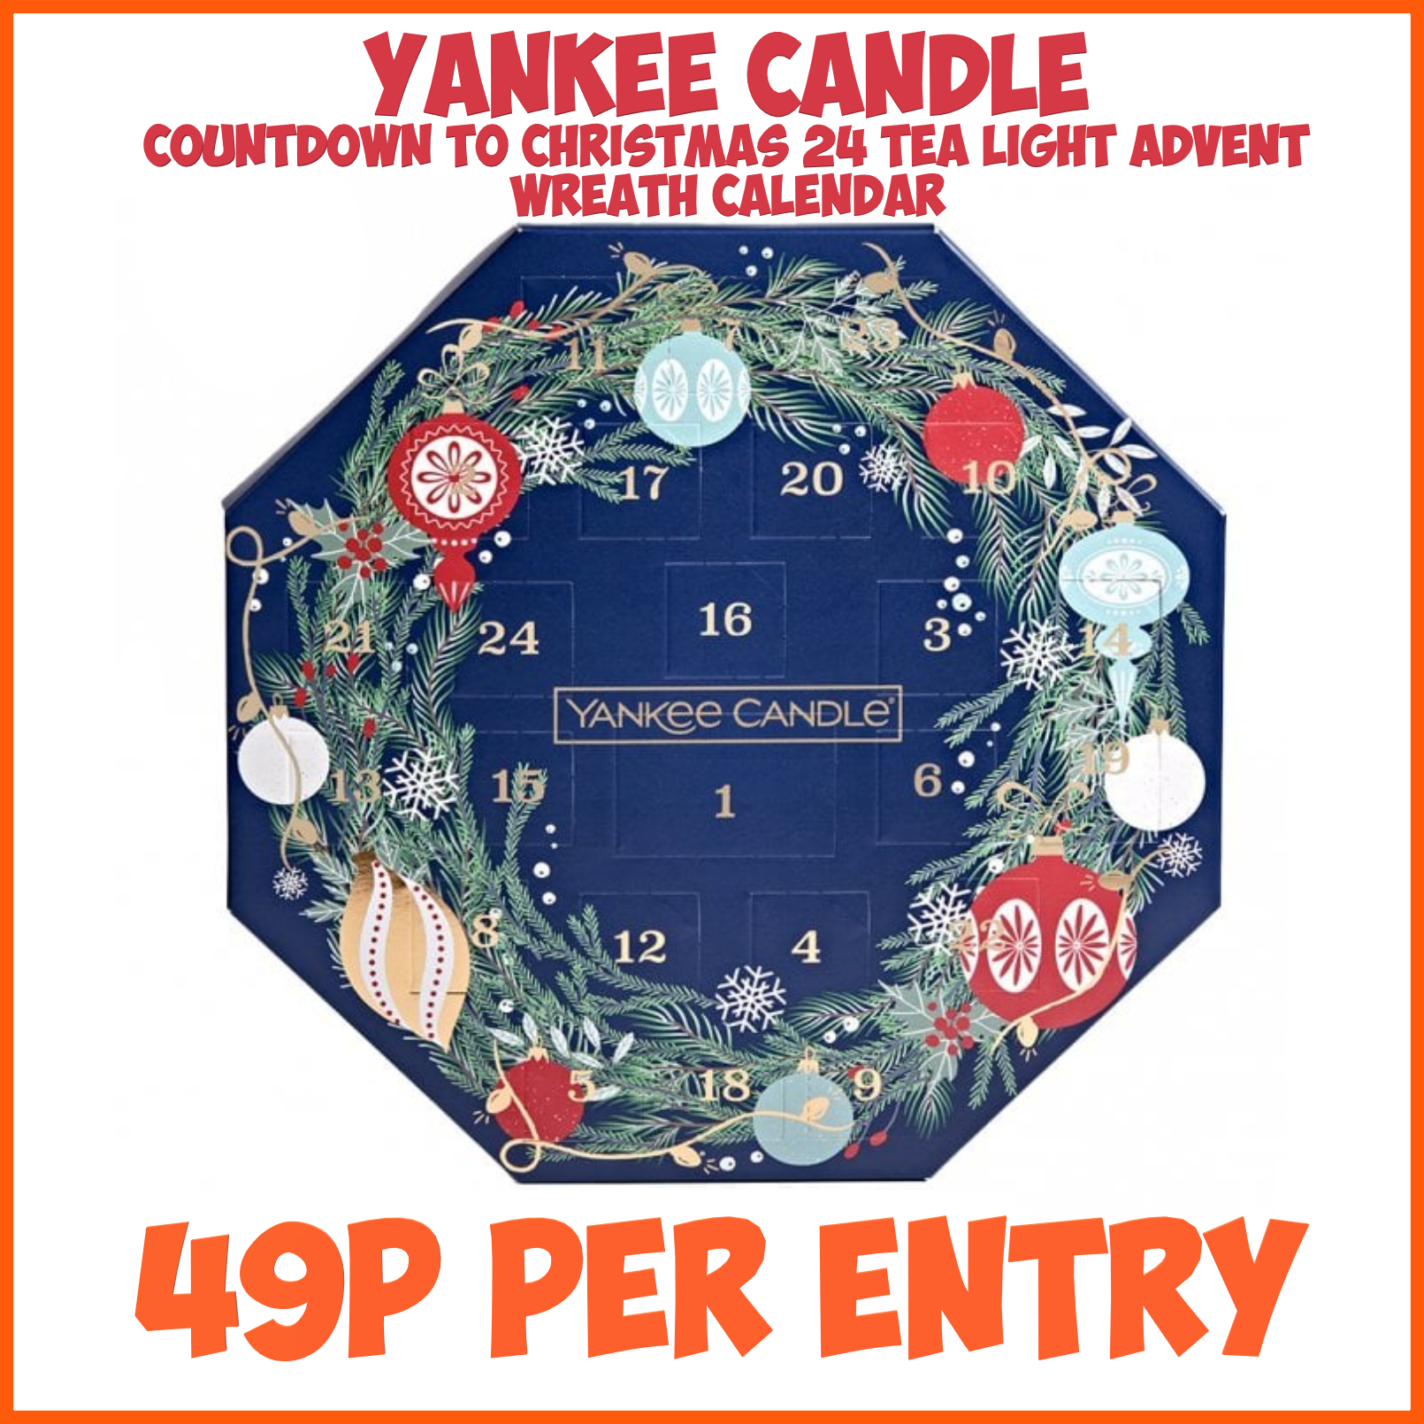 Yankee Candle Countdown to Christmas 24 Tea Light Advent Wreath